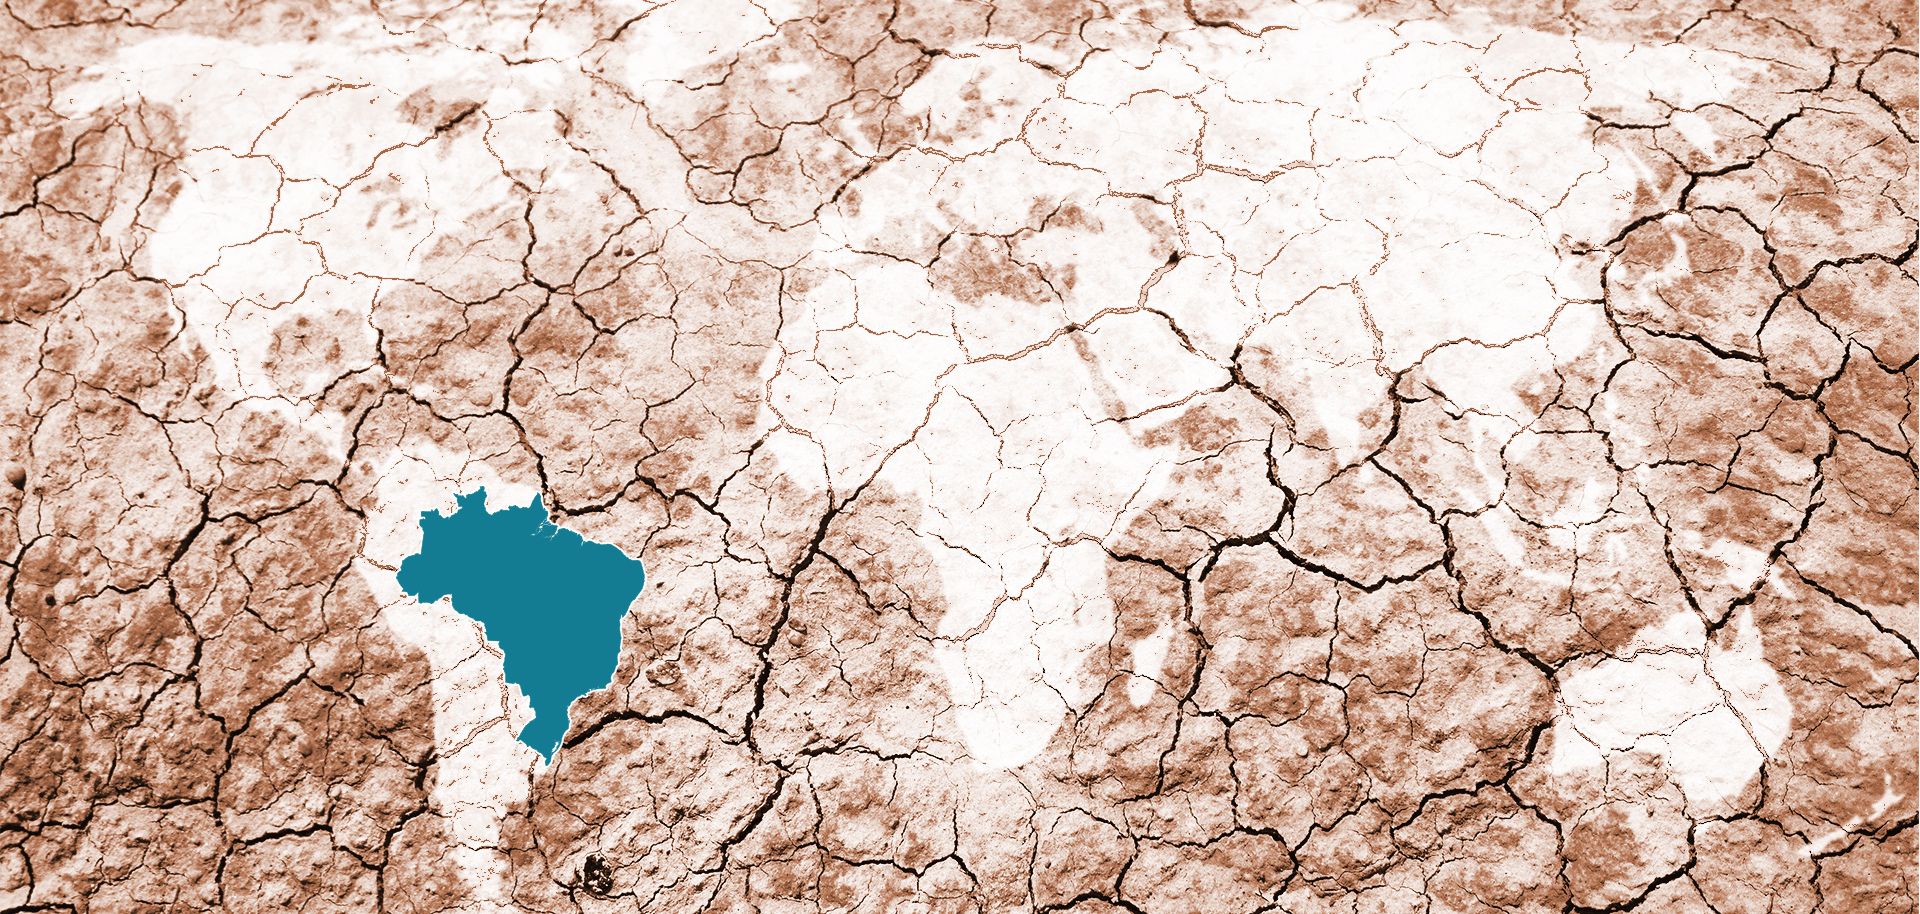 In Brazil, worst drought in decades felt at gigantic dam